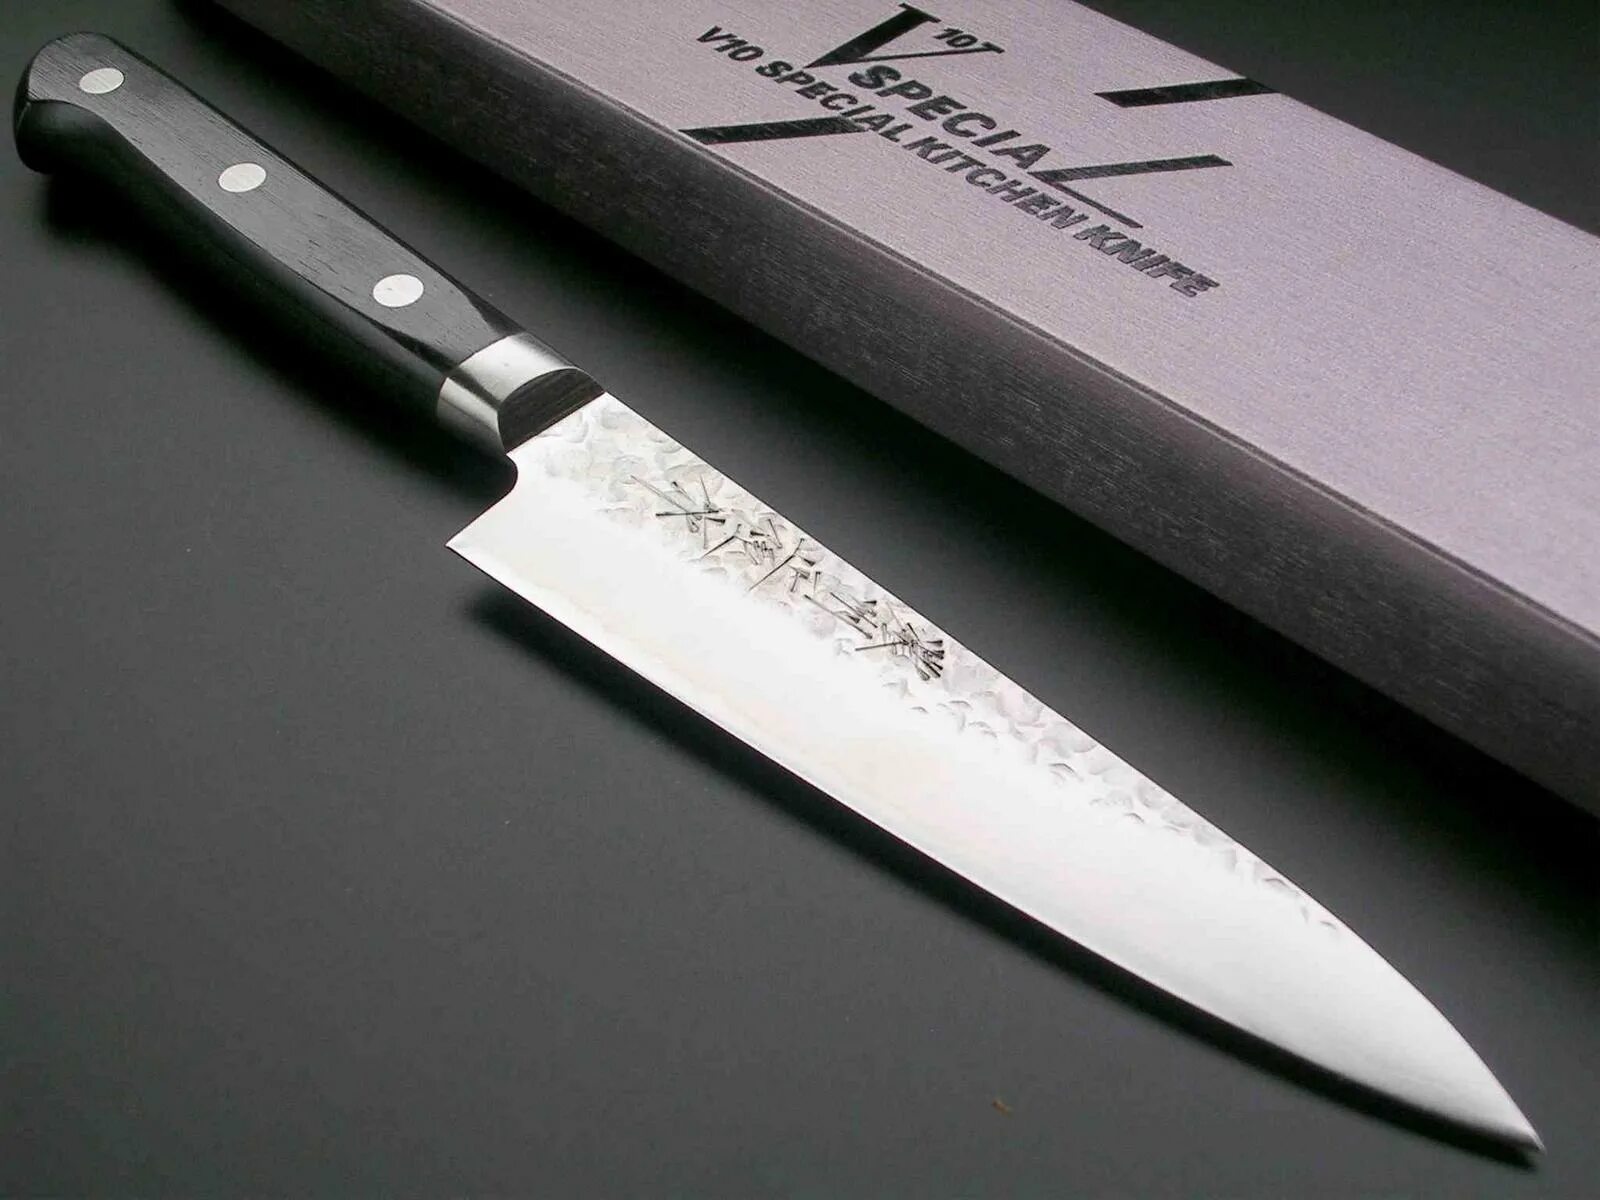 Ножевой a v. Нож кухонный d2. Нож кухонный серрейторный. Инерционный кухонный нож. Вьетнамский кухонный нож.